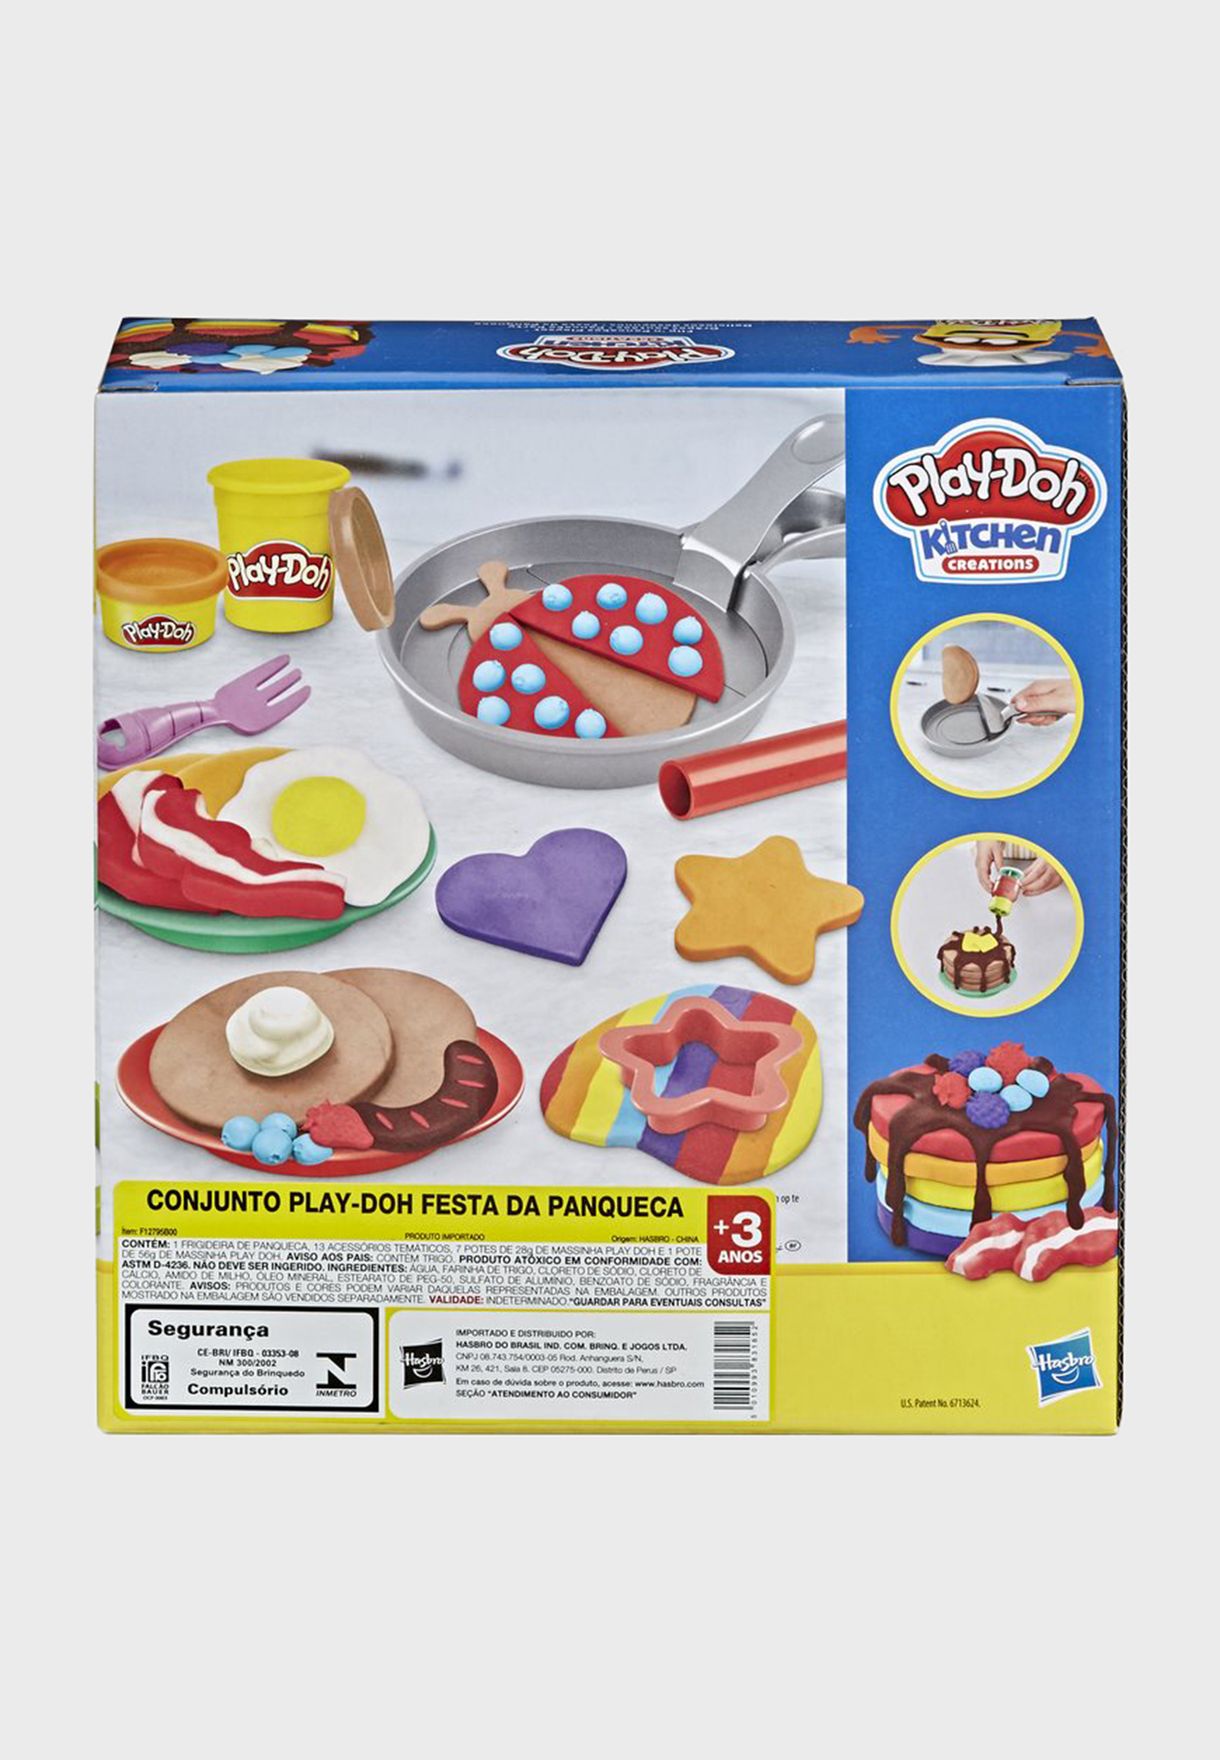 Play-Doh Pancakes Playset